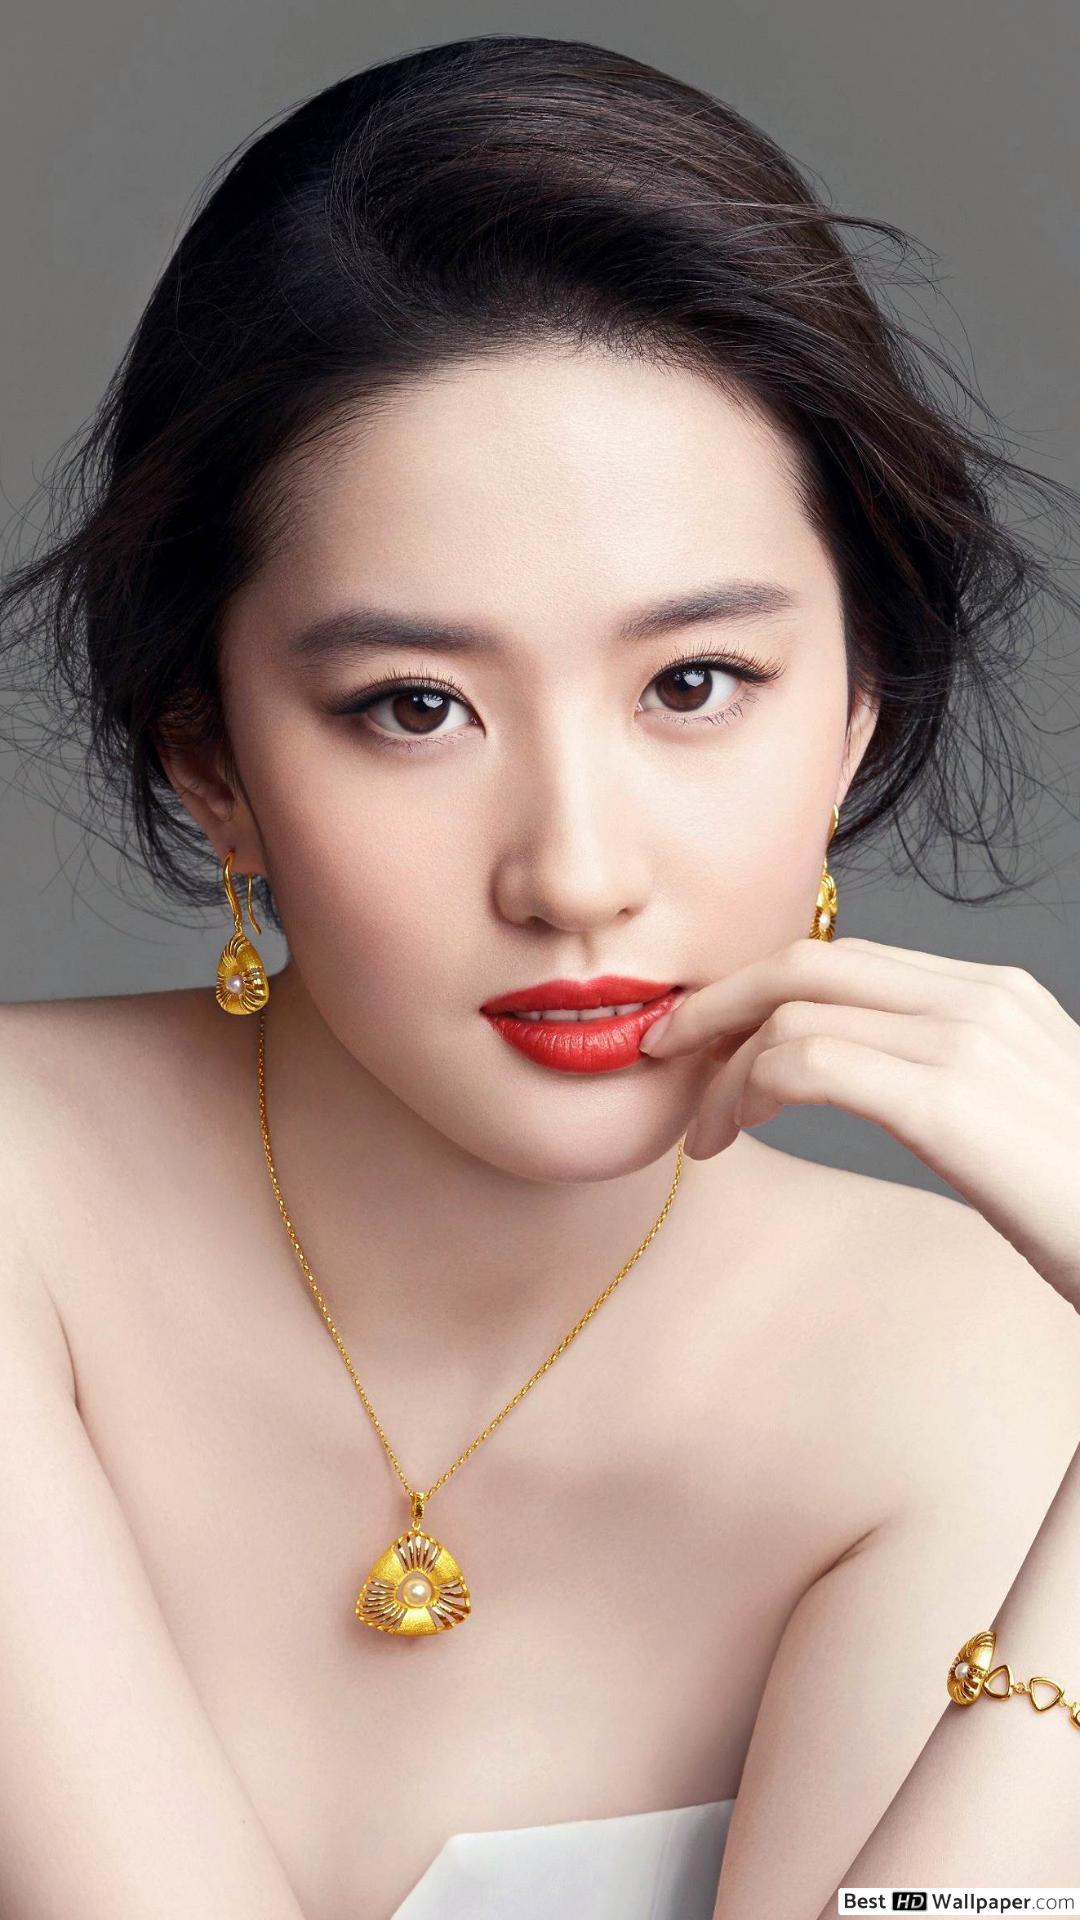 Chinese Model Yifei (Crystal Liu) HD wallpaper download